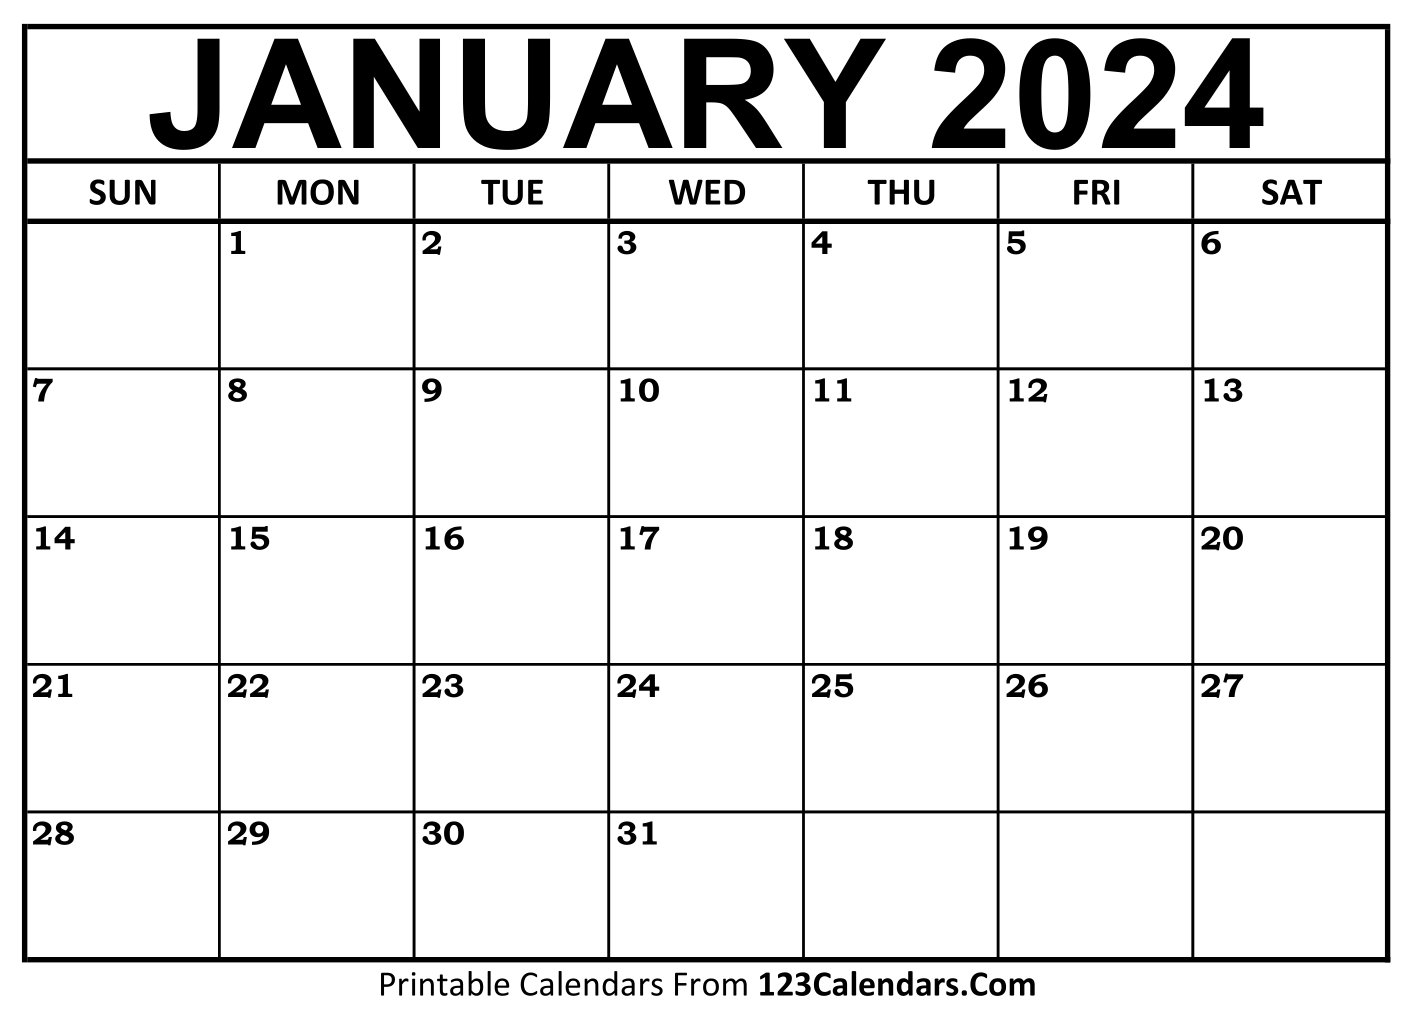 Printable January 2024 Calendar Templates - 123Calendars for January 2024 Printable Calendar Free